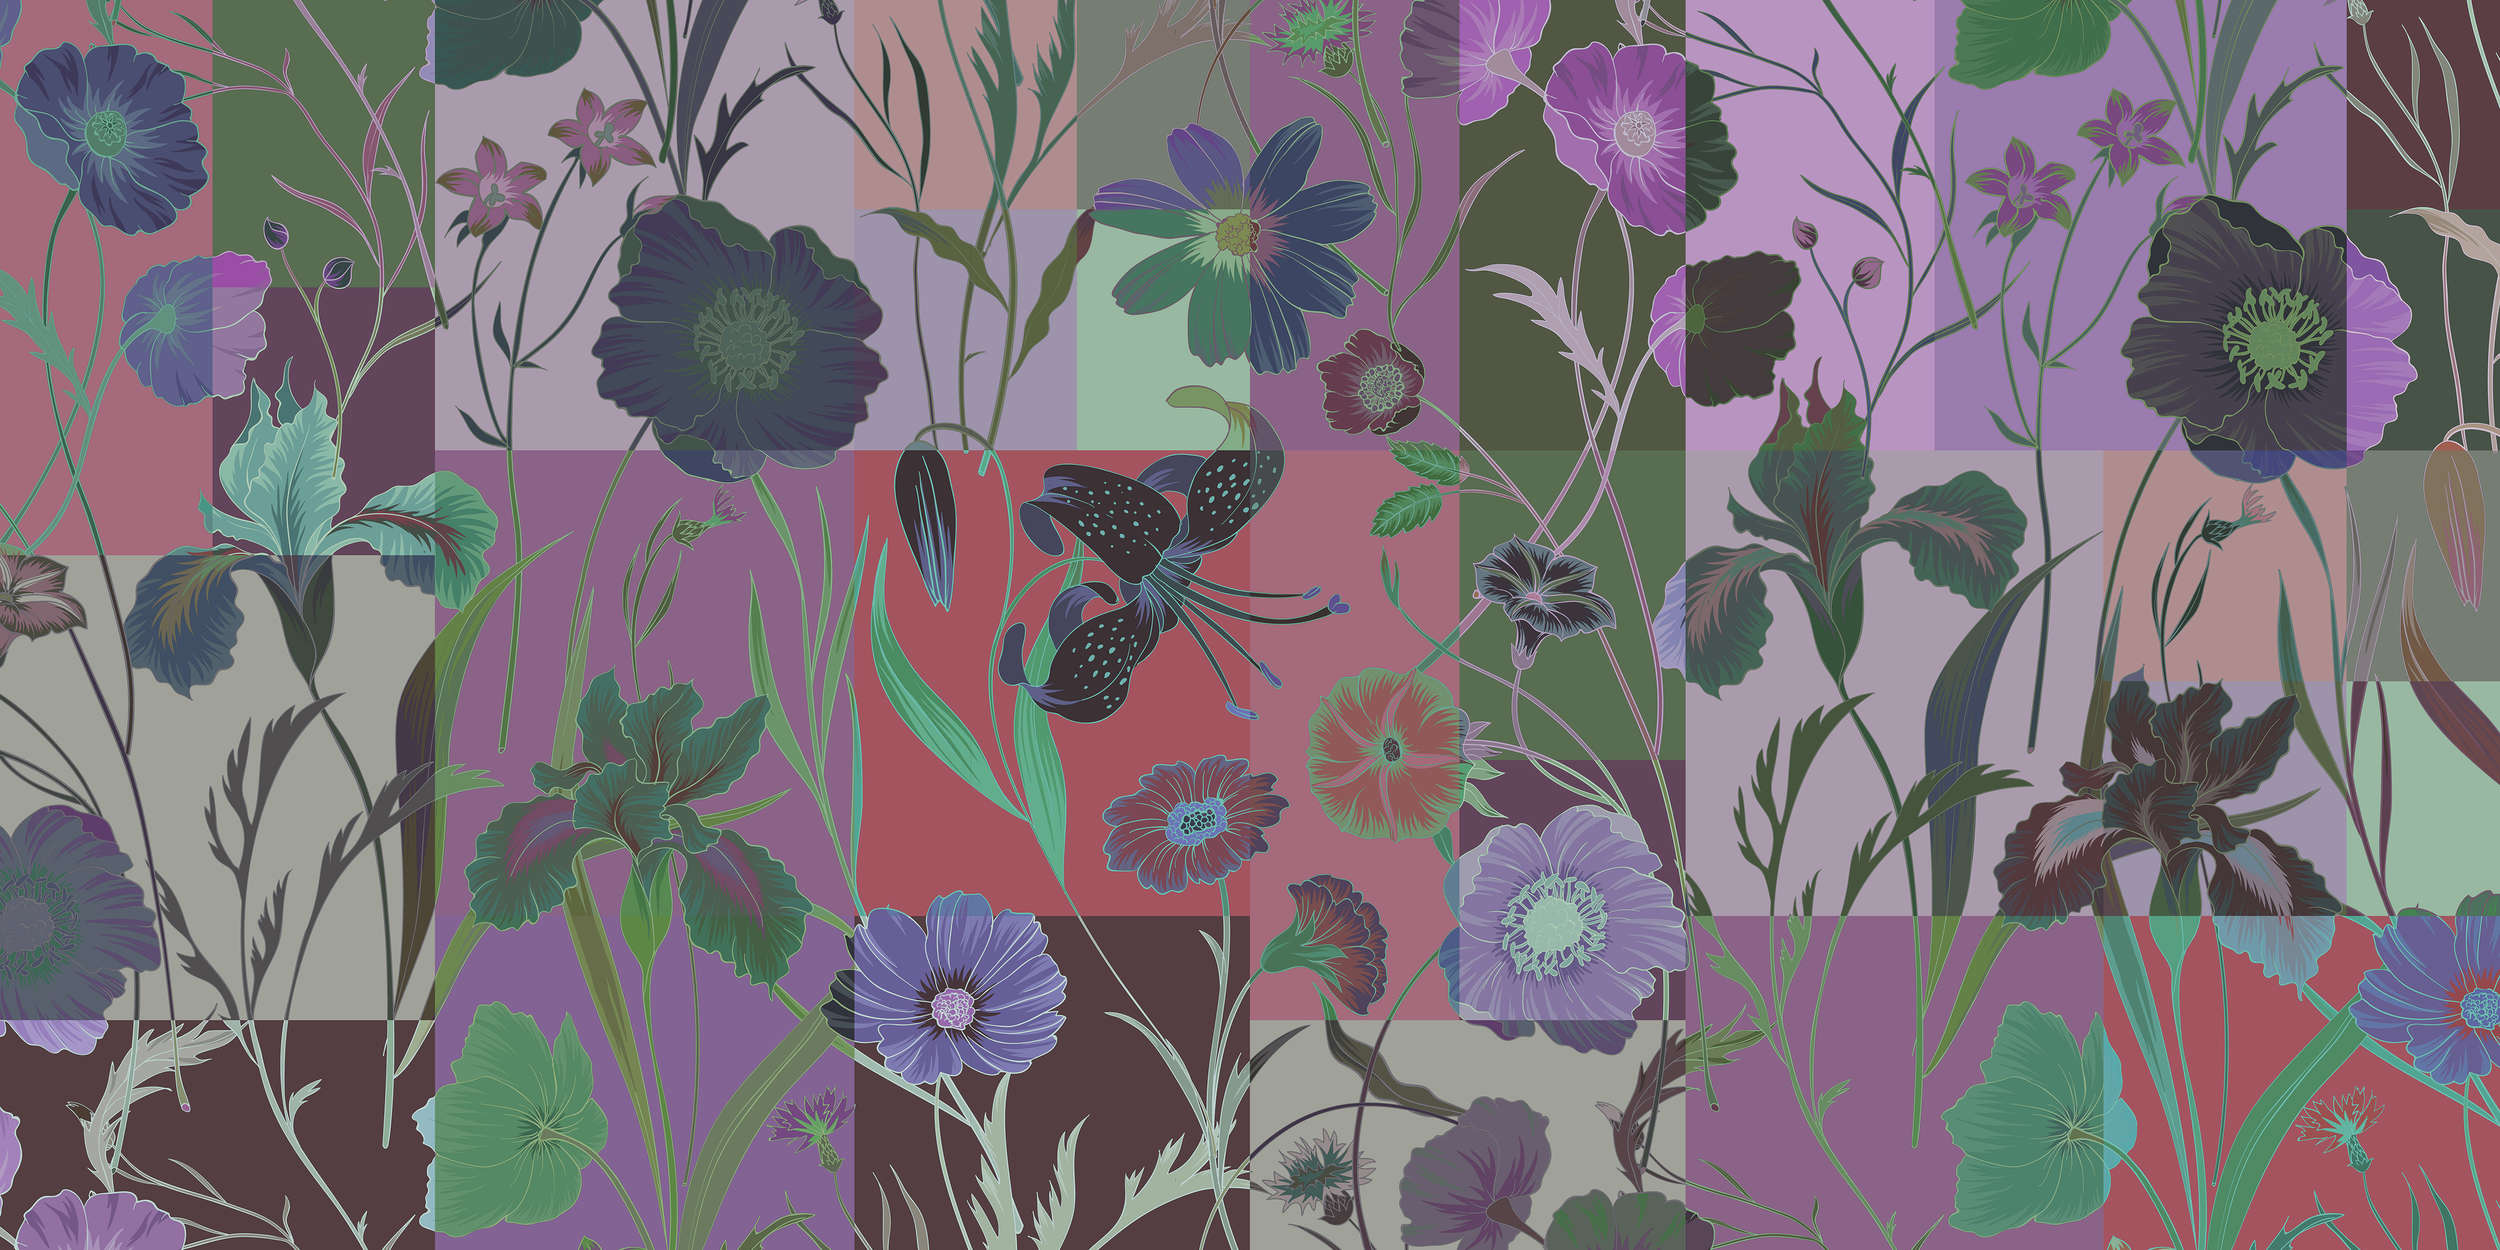             Floral patch 1 - Bont gebloemd patchwork behang - Groen, Rood | Mat glad vlies
        